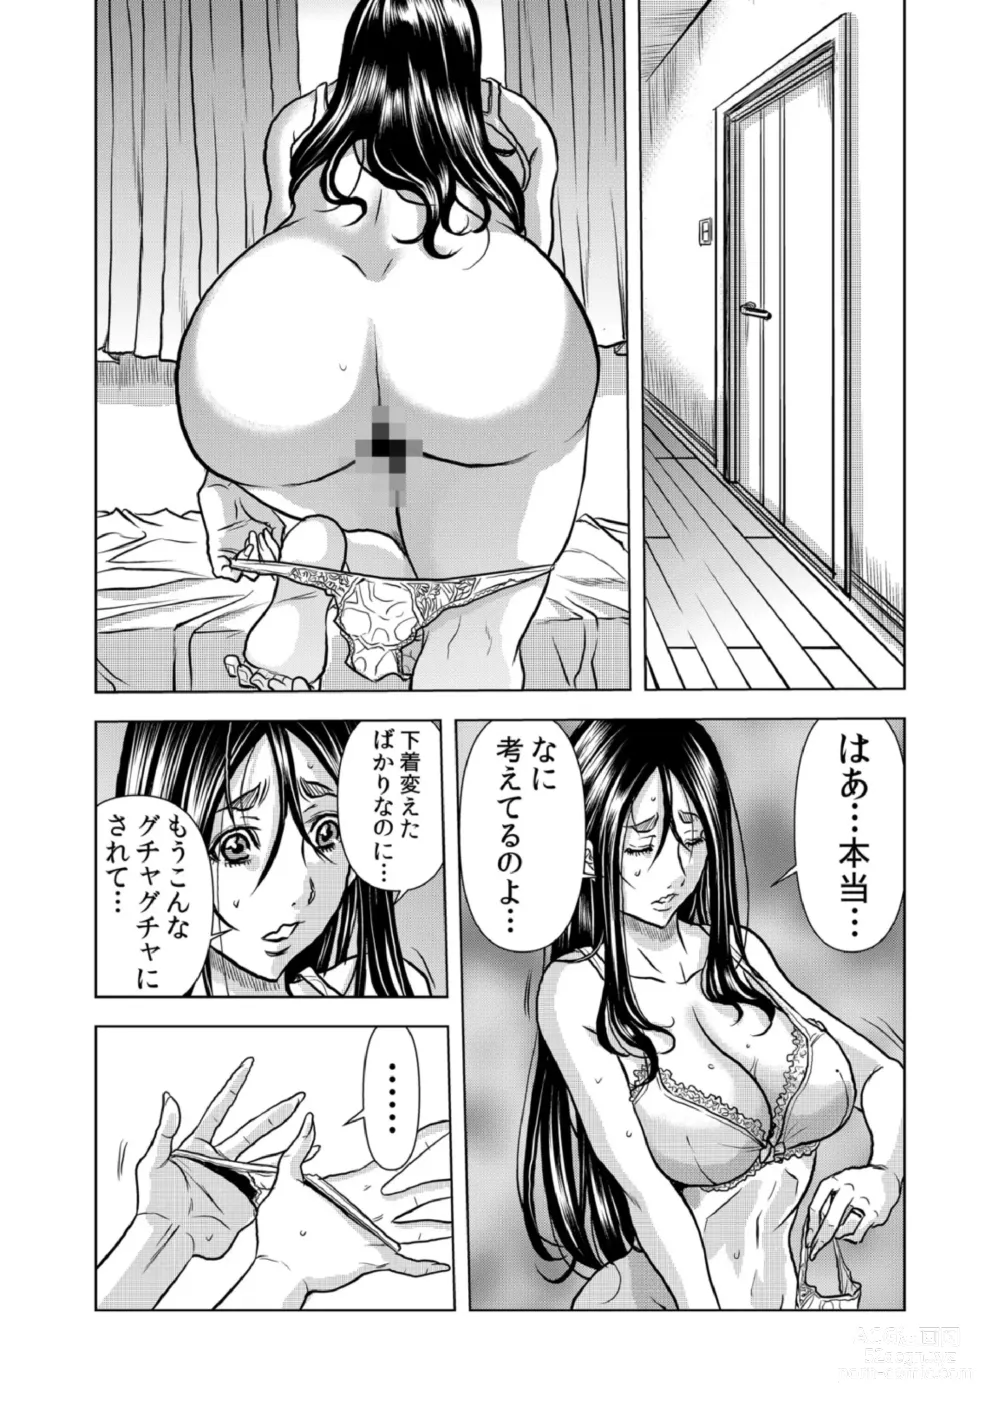 Page 14 of manga Mamasan,yobai ha OK desuka? VOL9